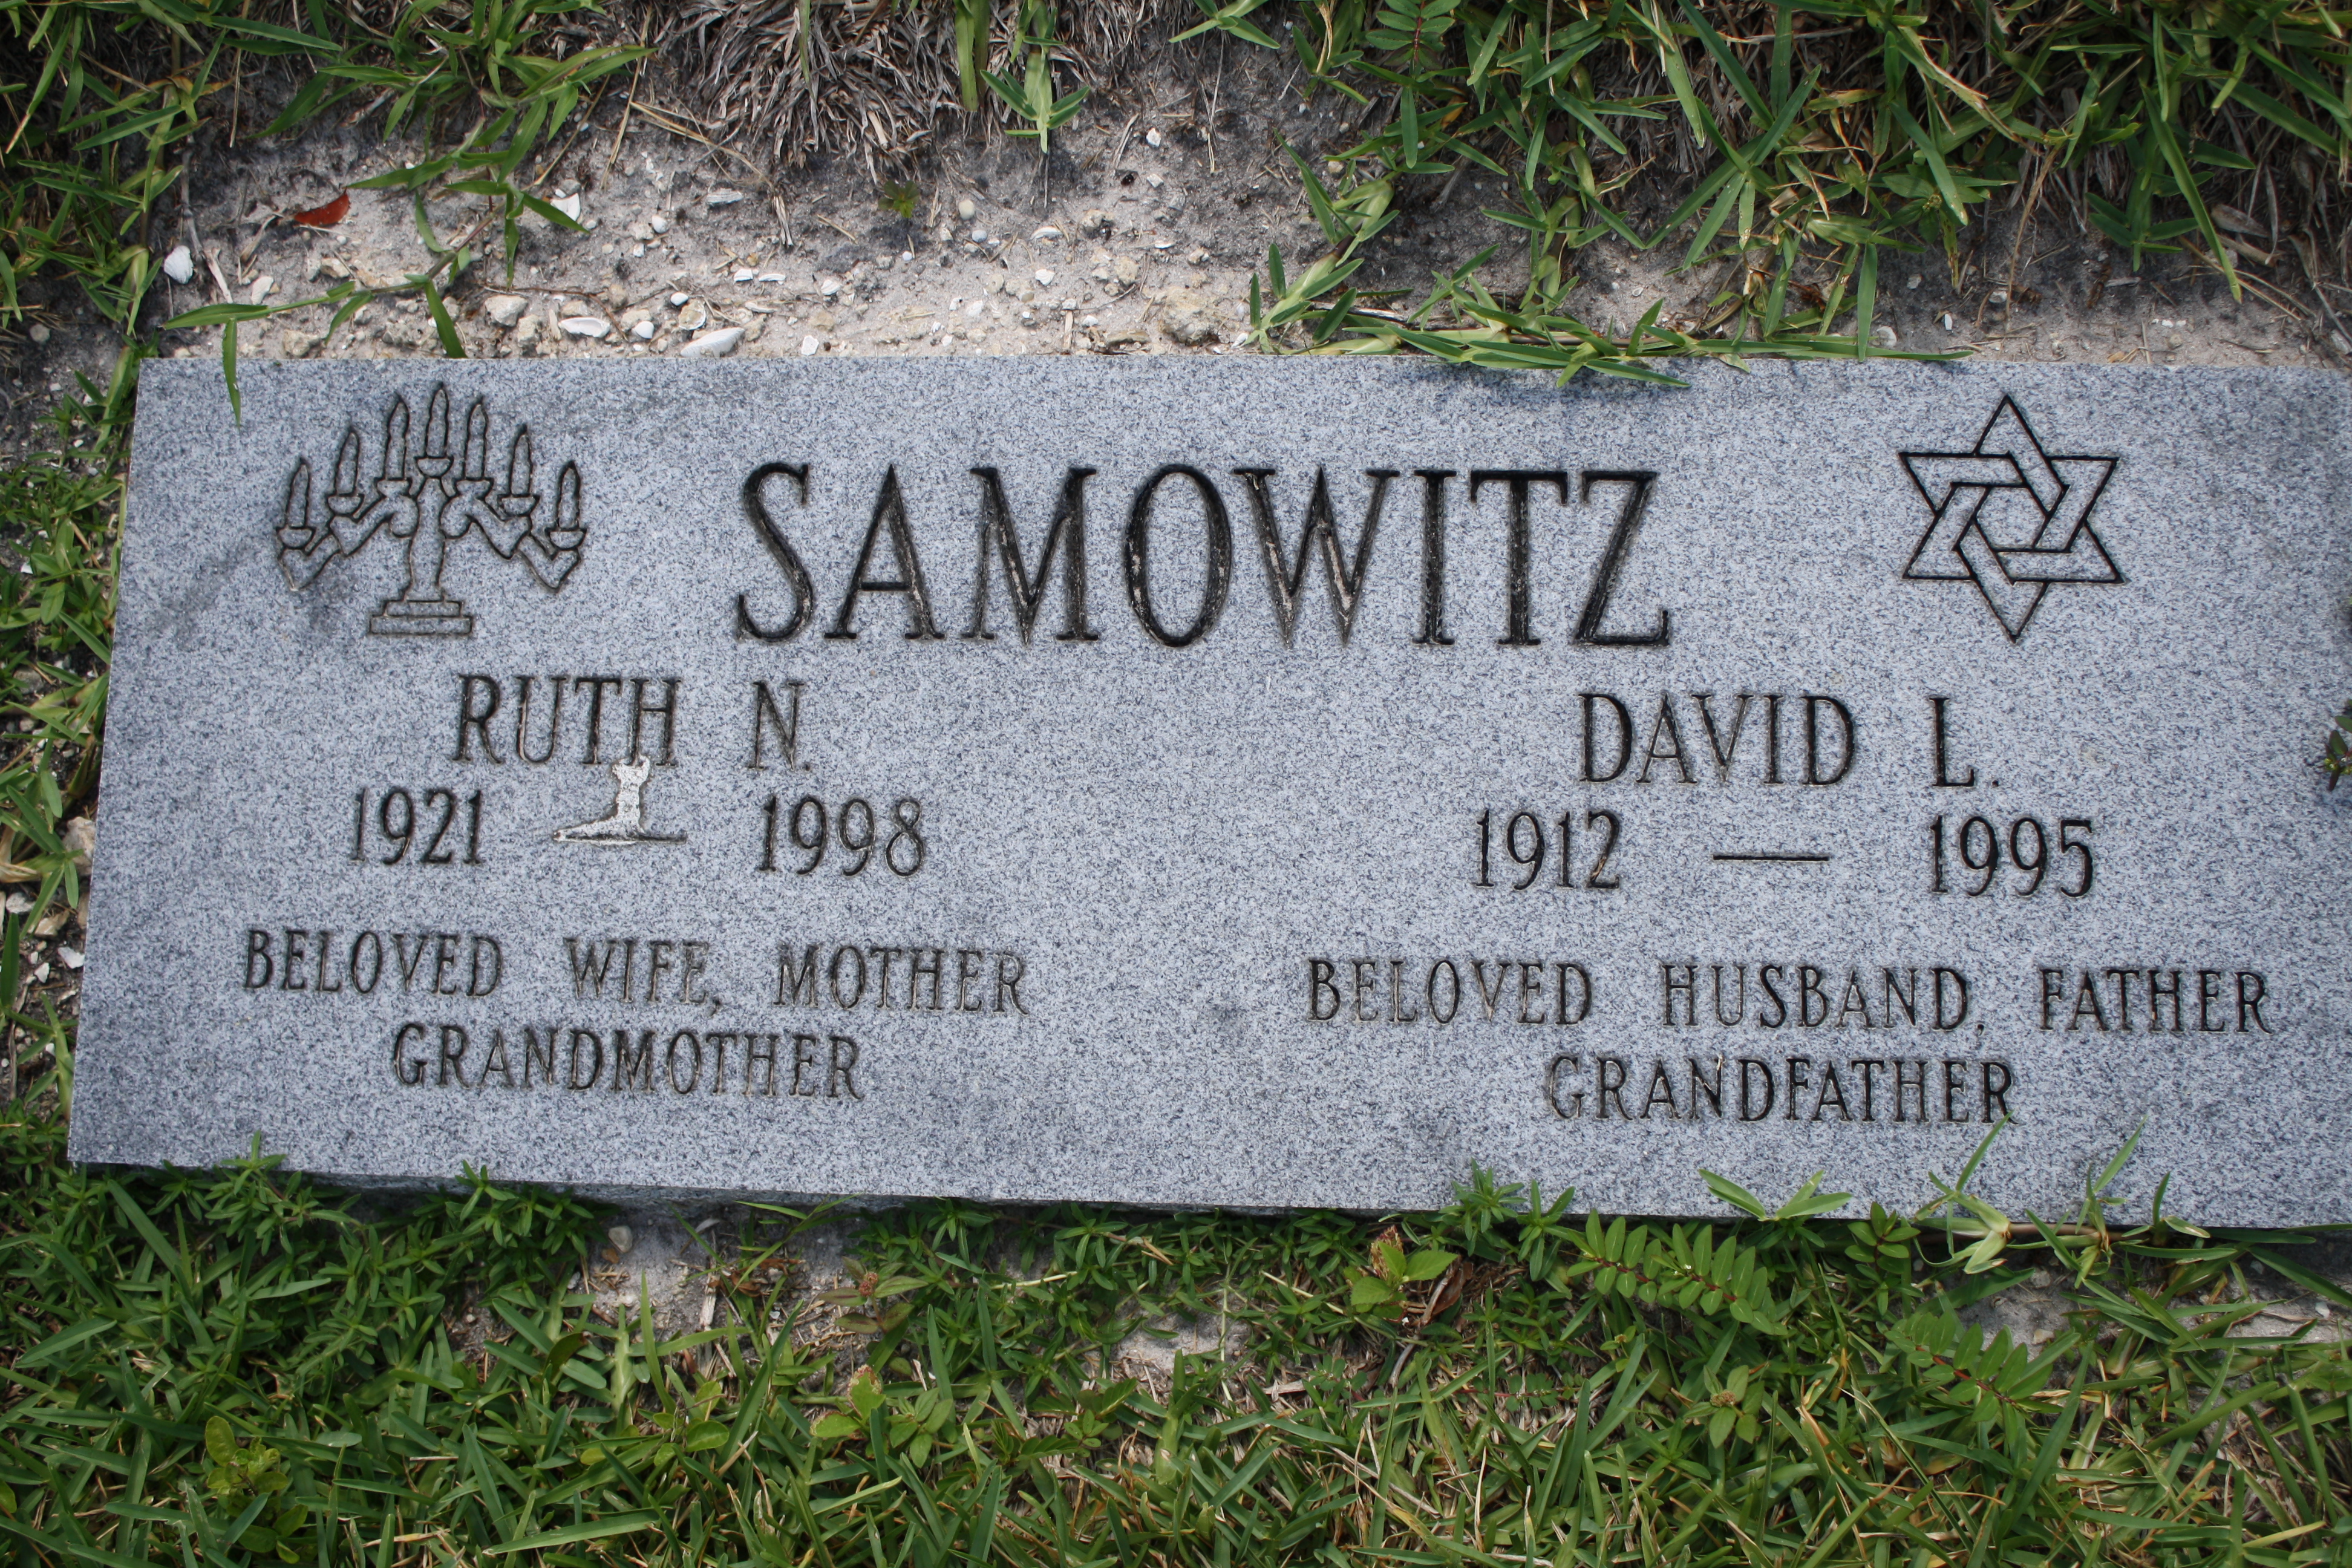 Ruth N Samowitz